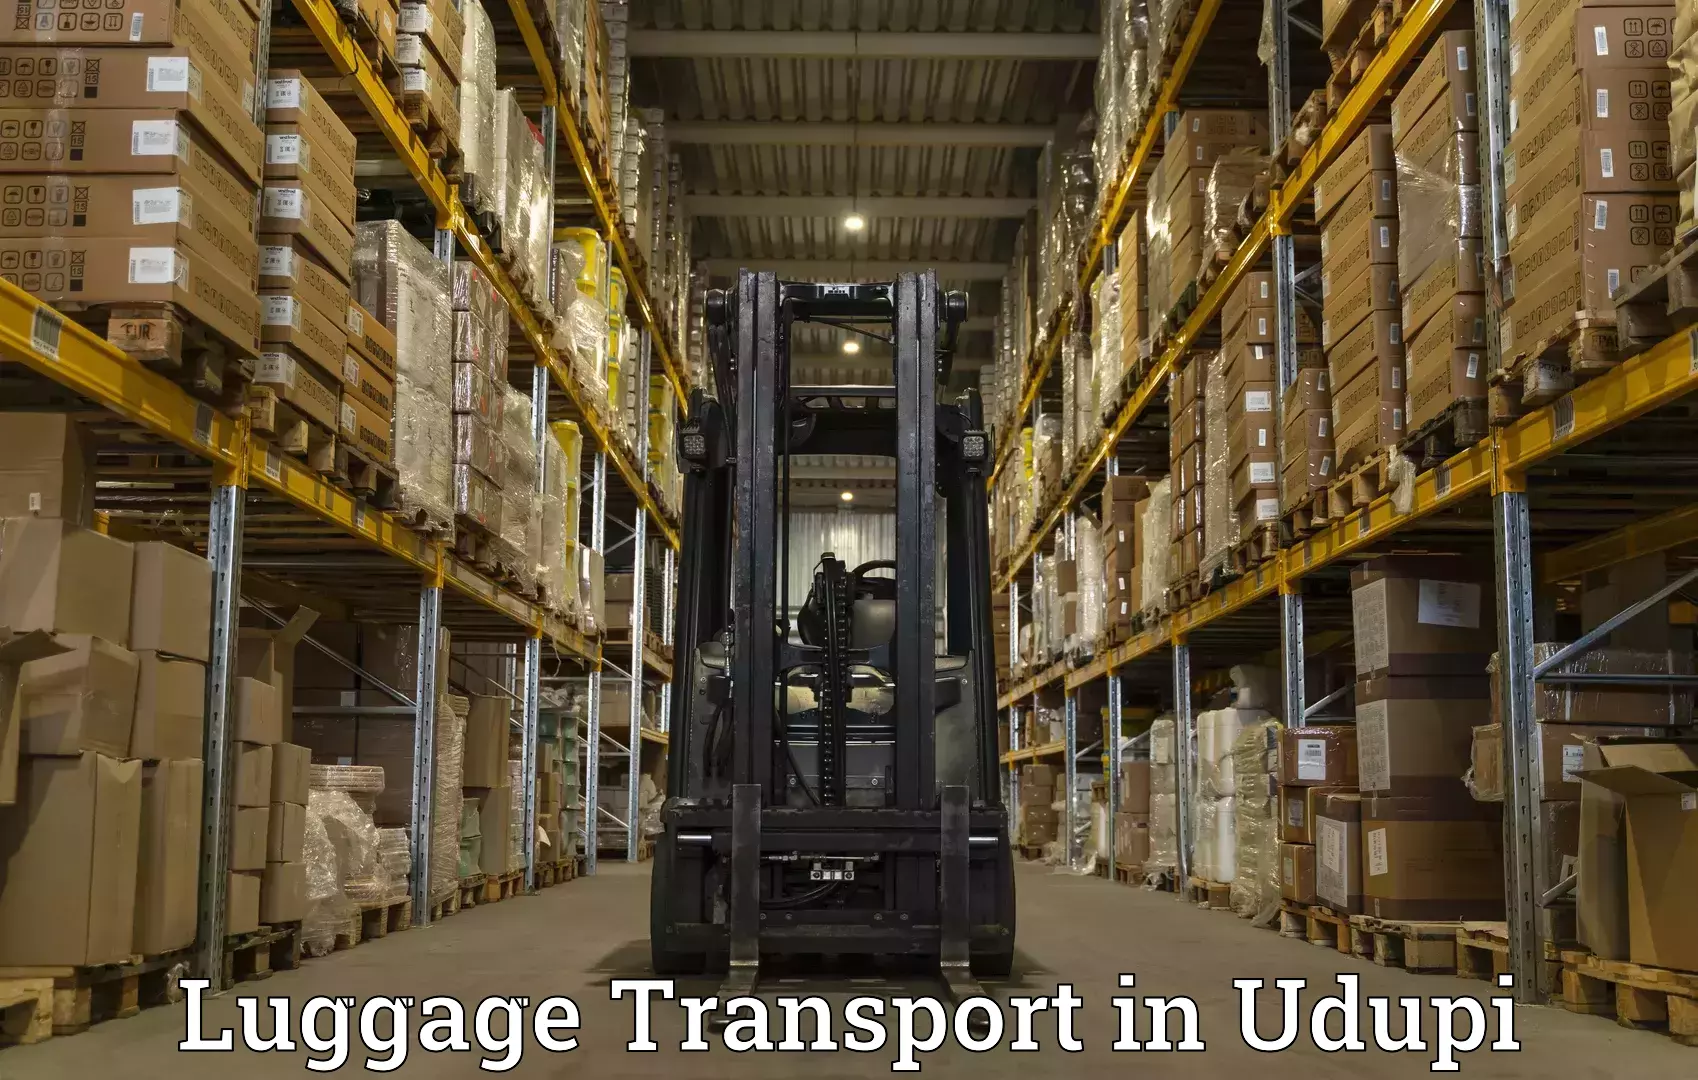 Doorstep luggage collection in Udupi